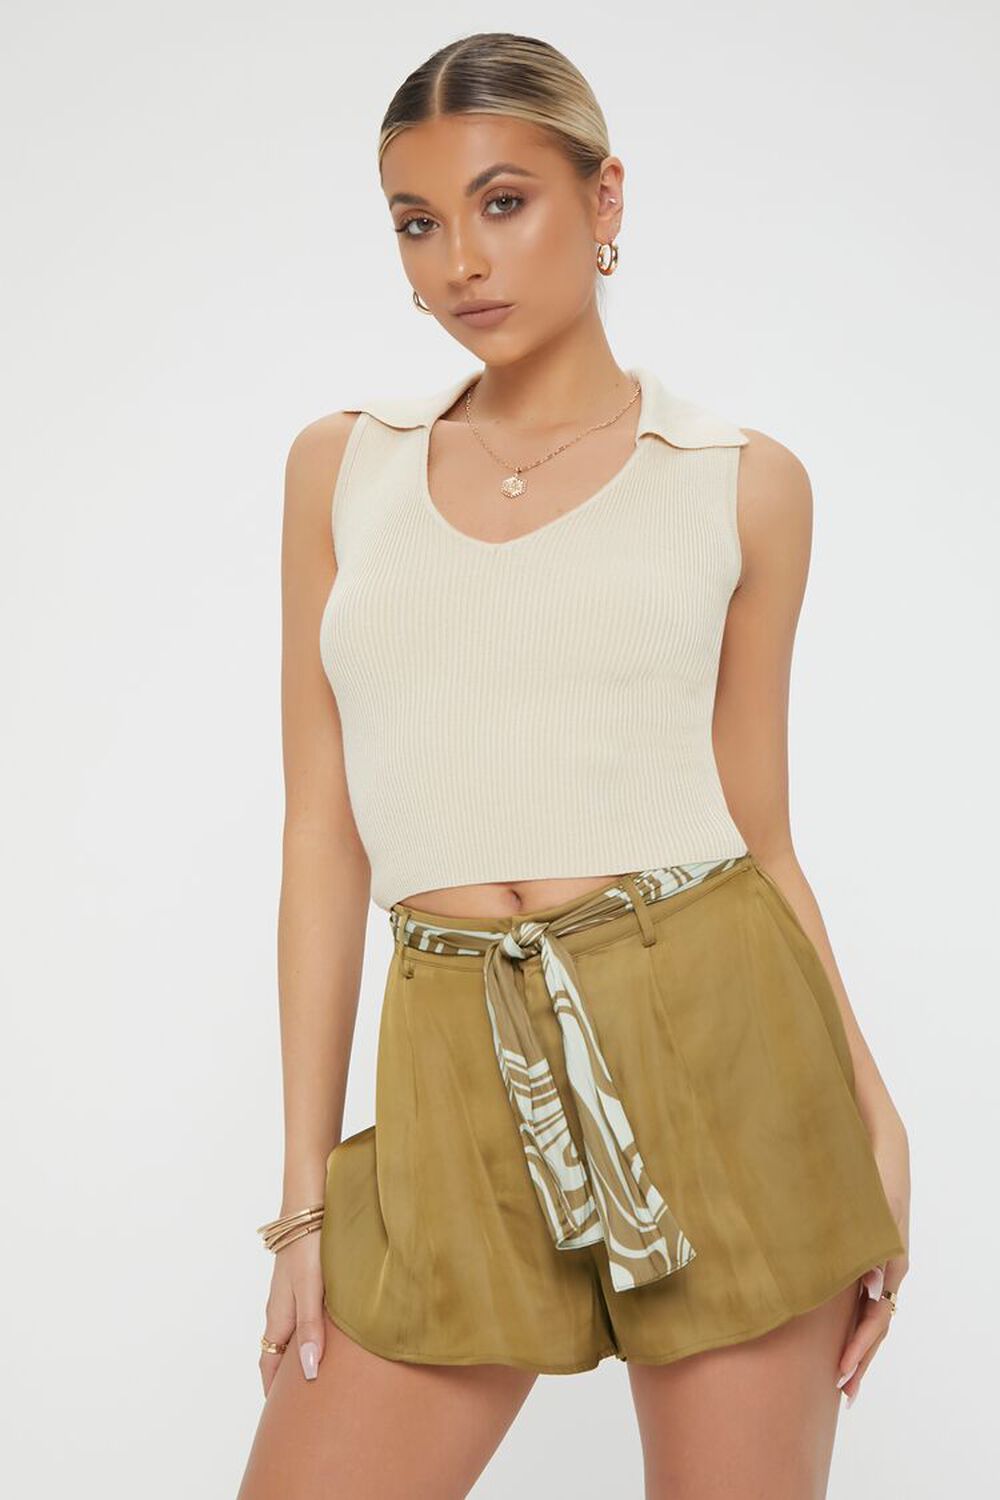 CIGAR Belted Satin Mini Skirt, image 1